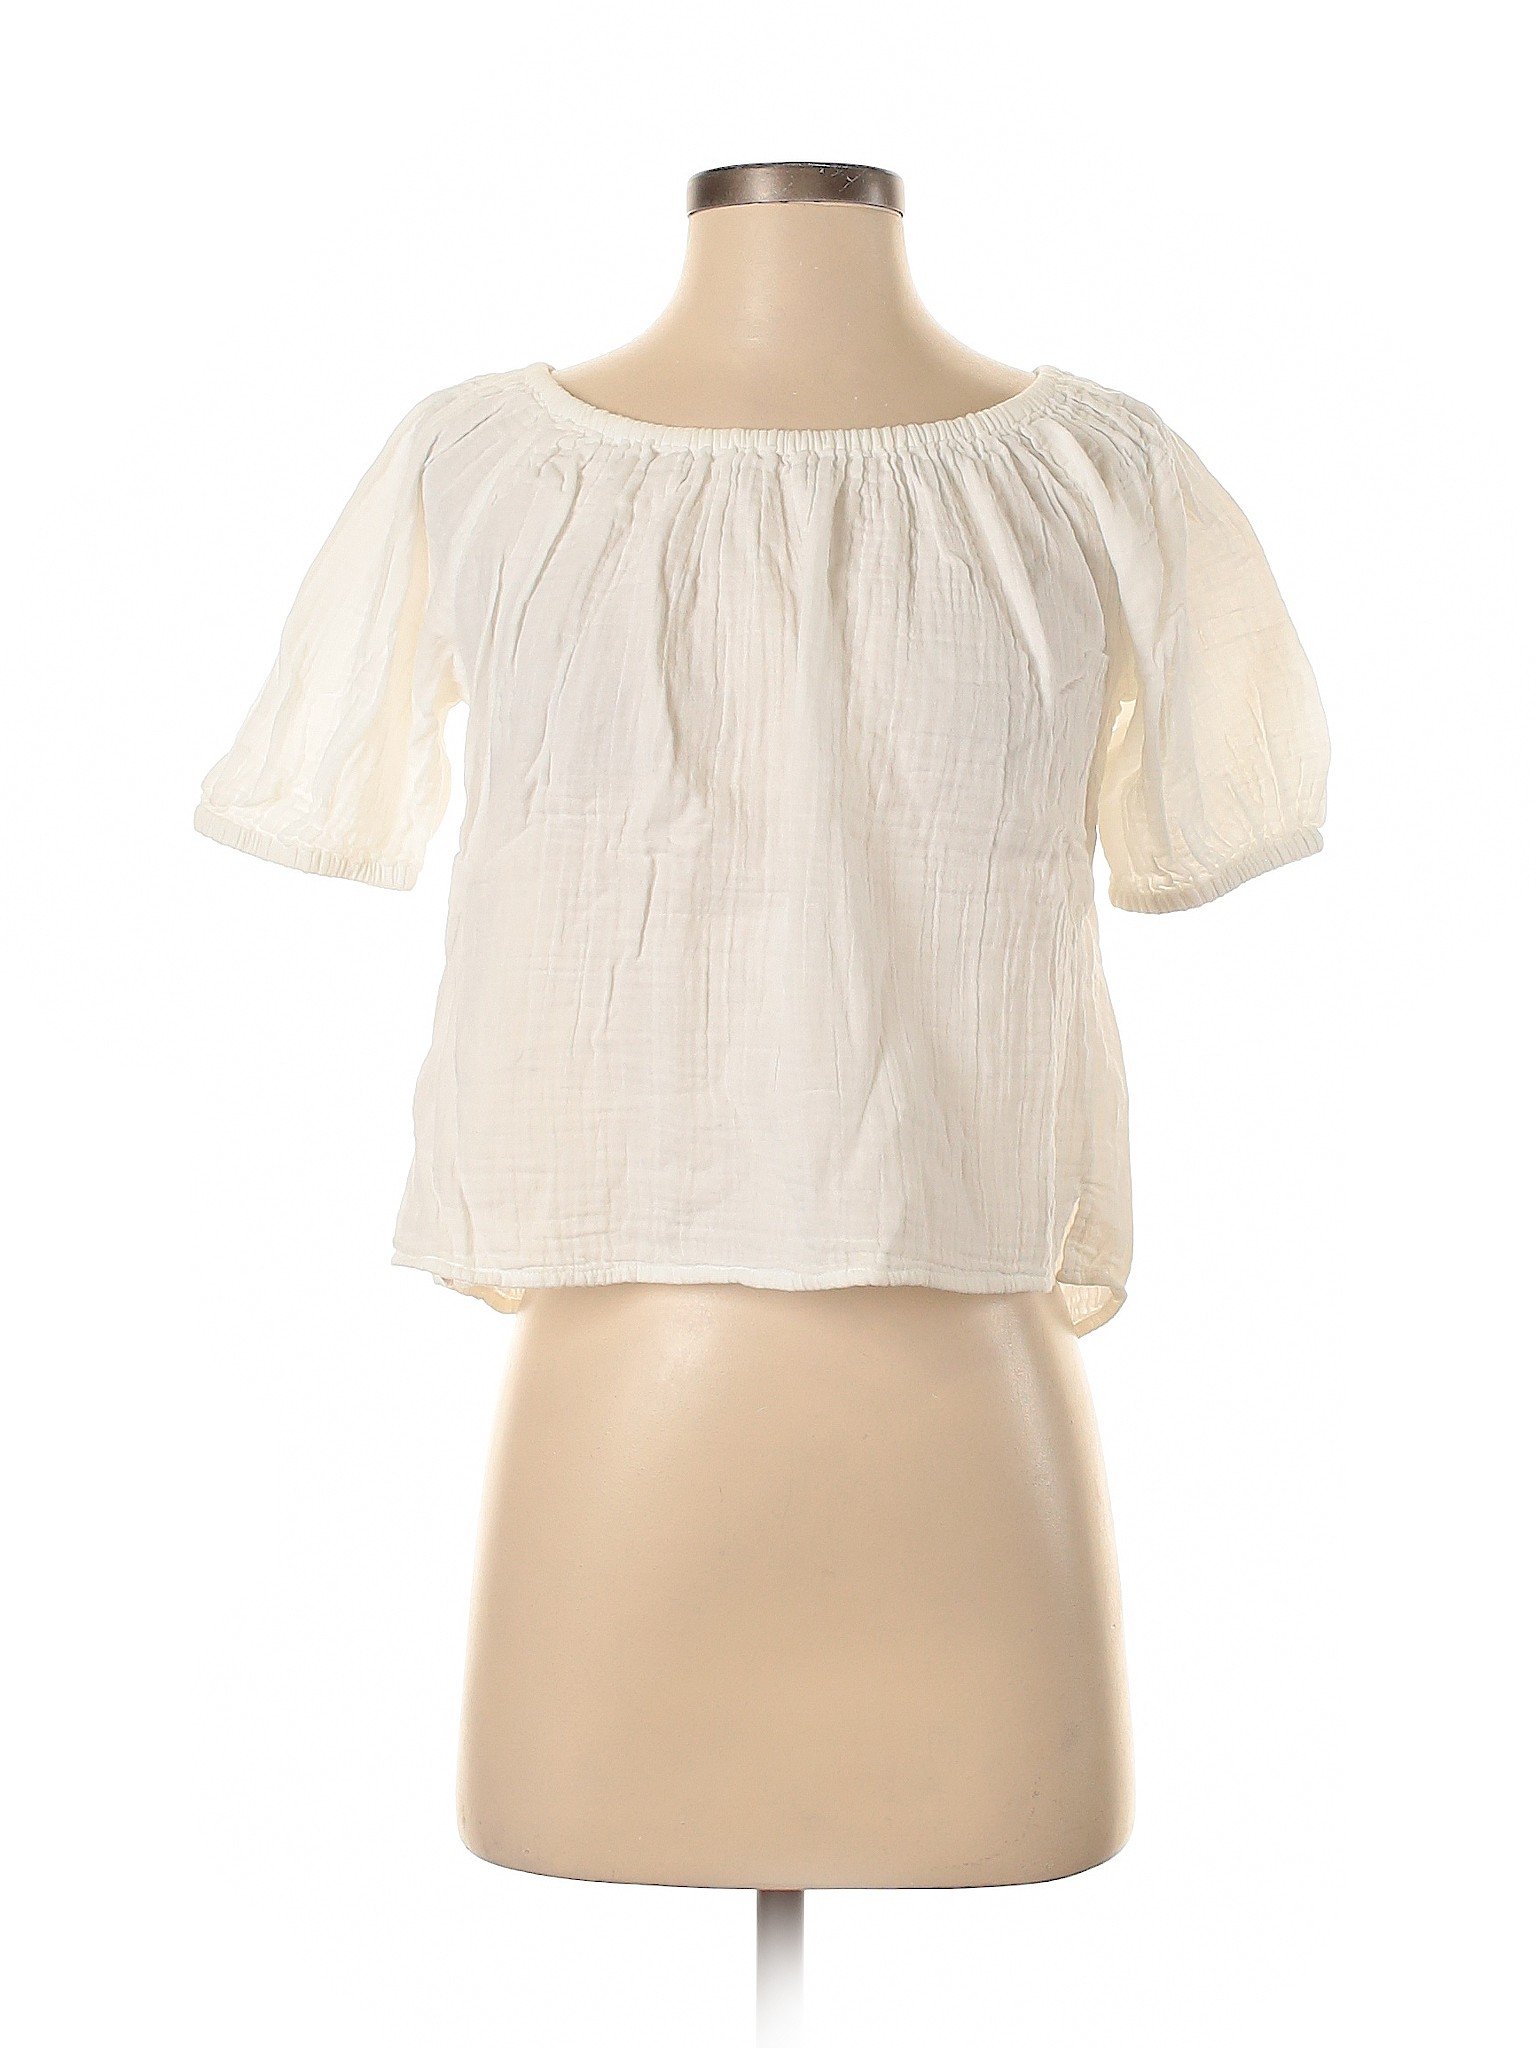 Ann Taylor LOFT Women White Short Sleeve Blouse XS Petites | eBay